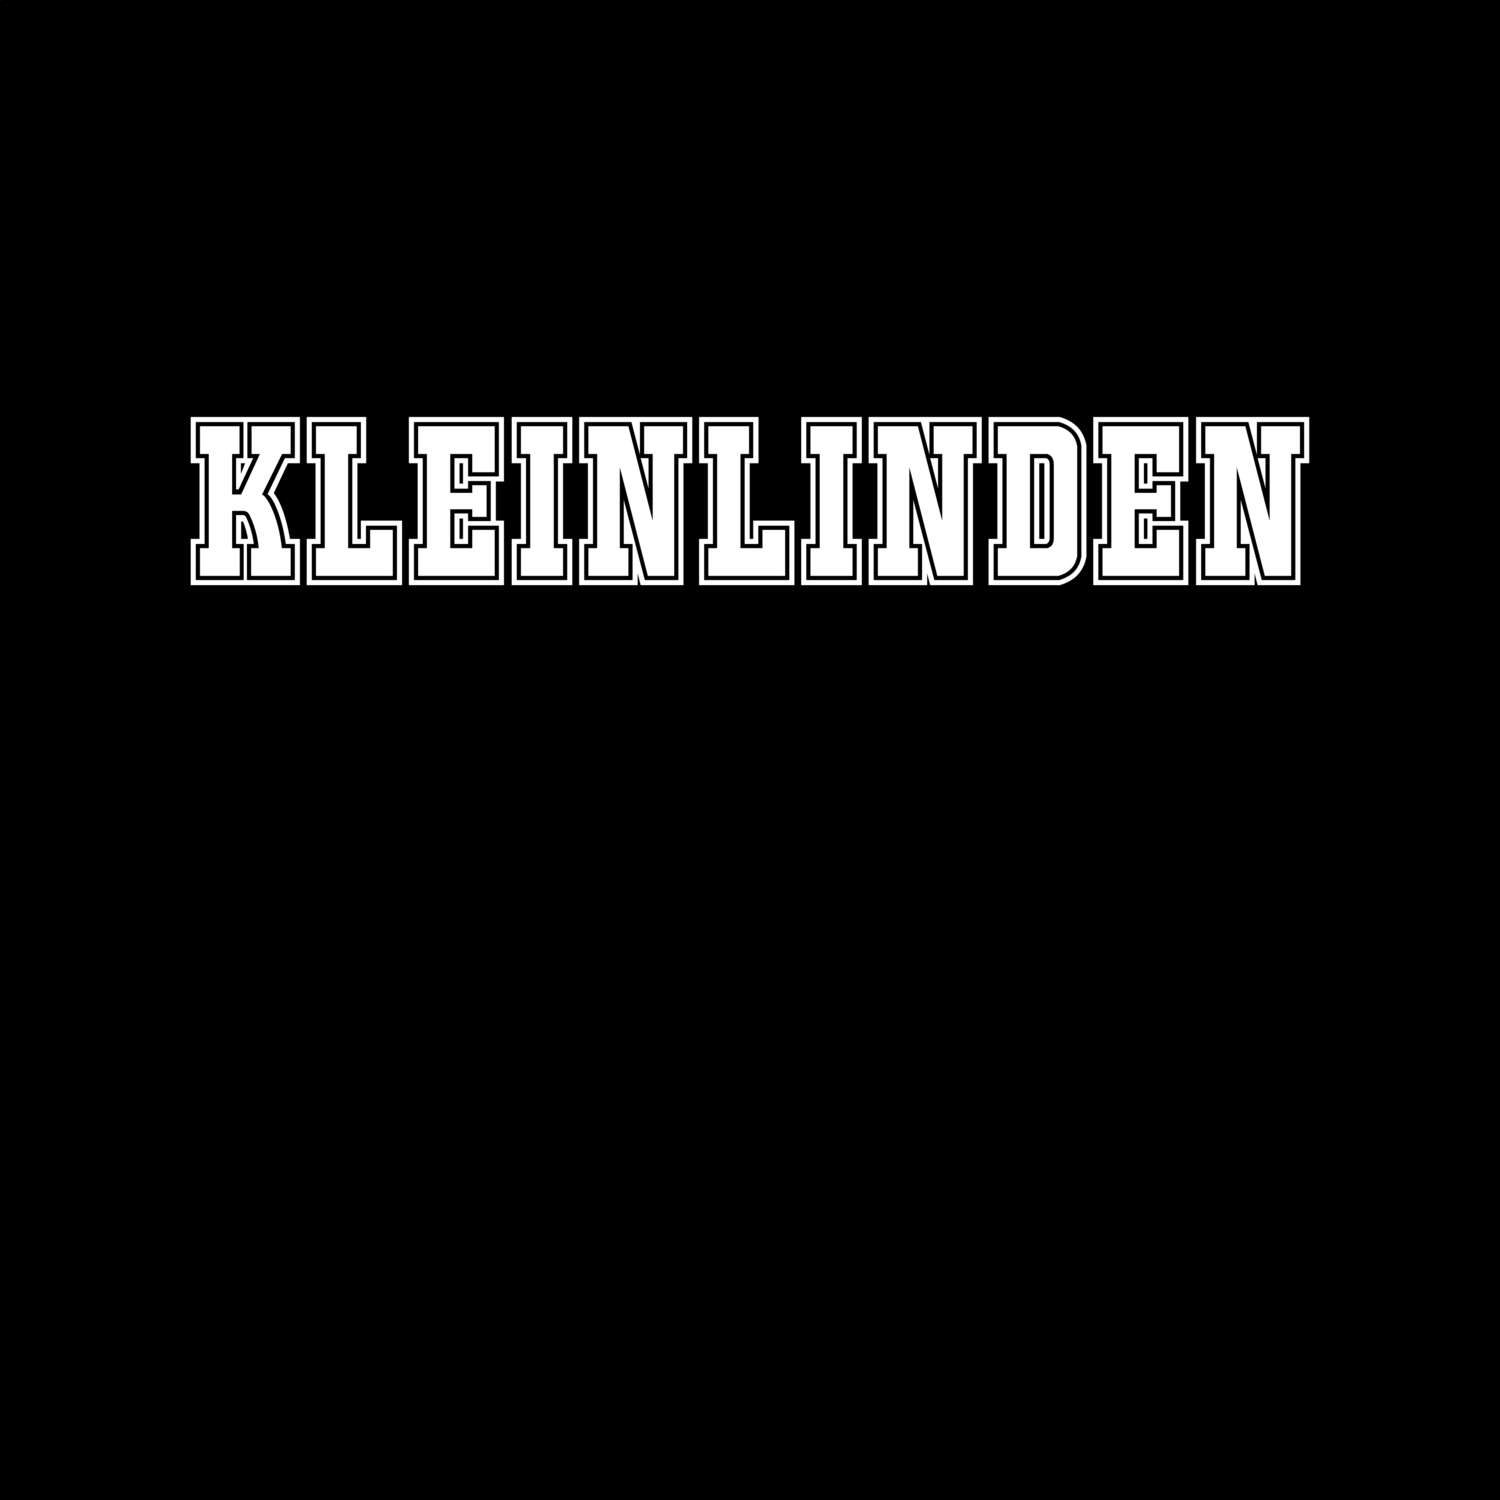 Kleinlinden T-Shirt »Classic«